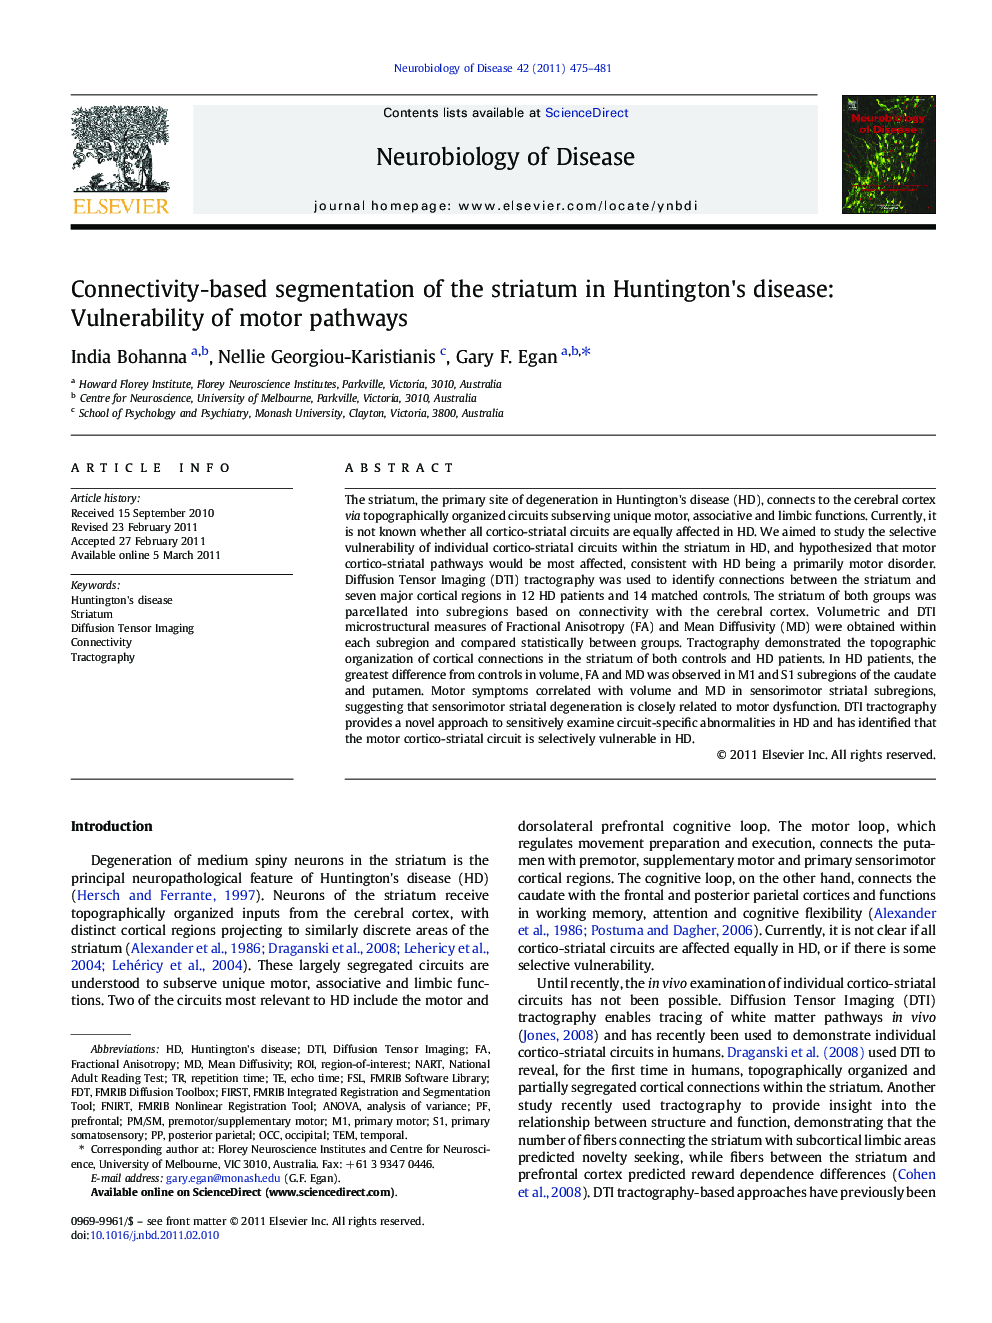 Connectivity-based segmentation of the striatum in Huntington's disease: Vulnerability of motor pathways